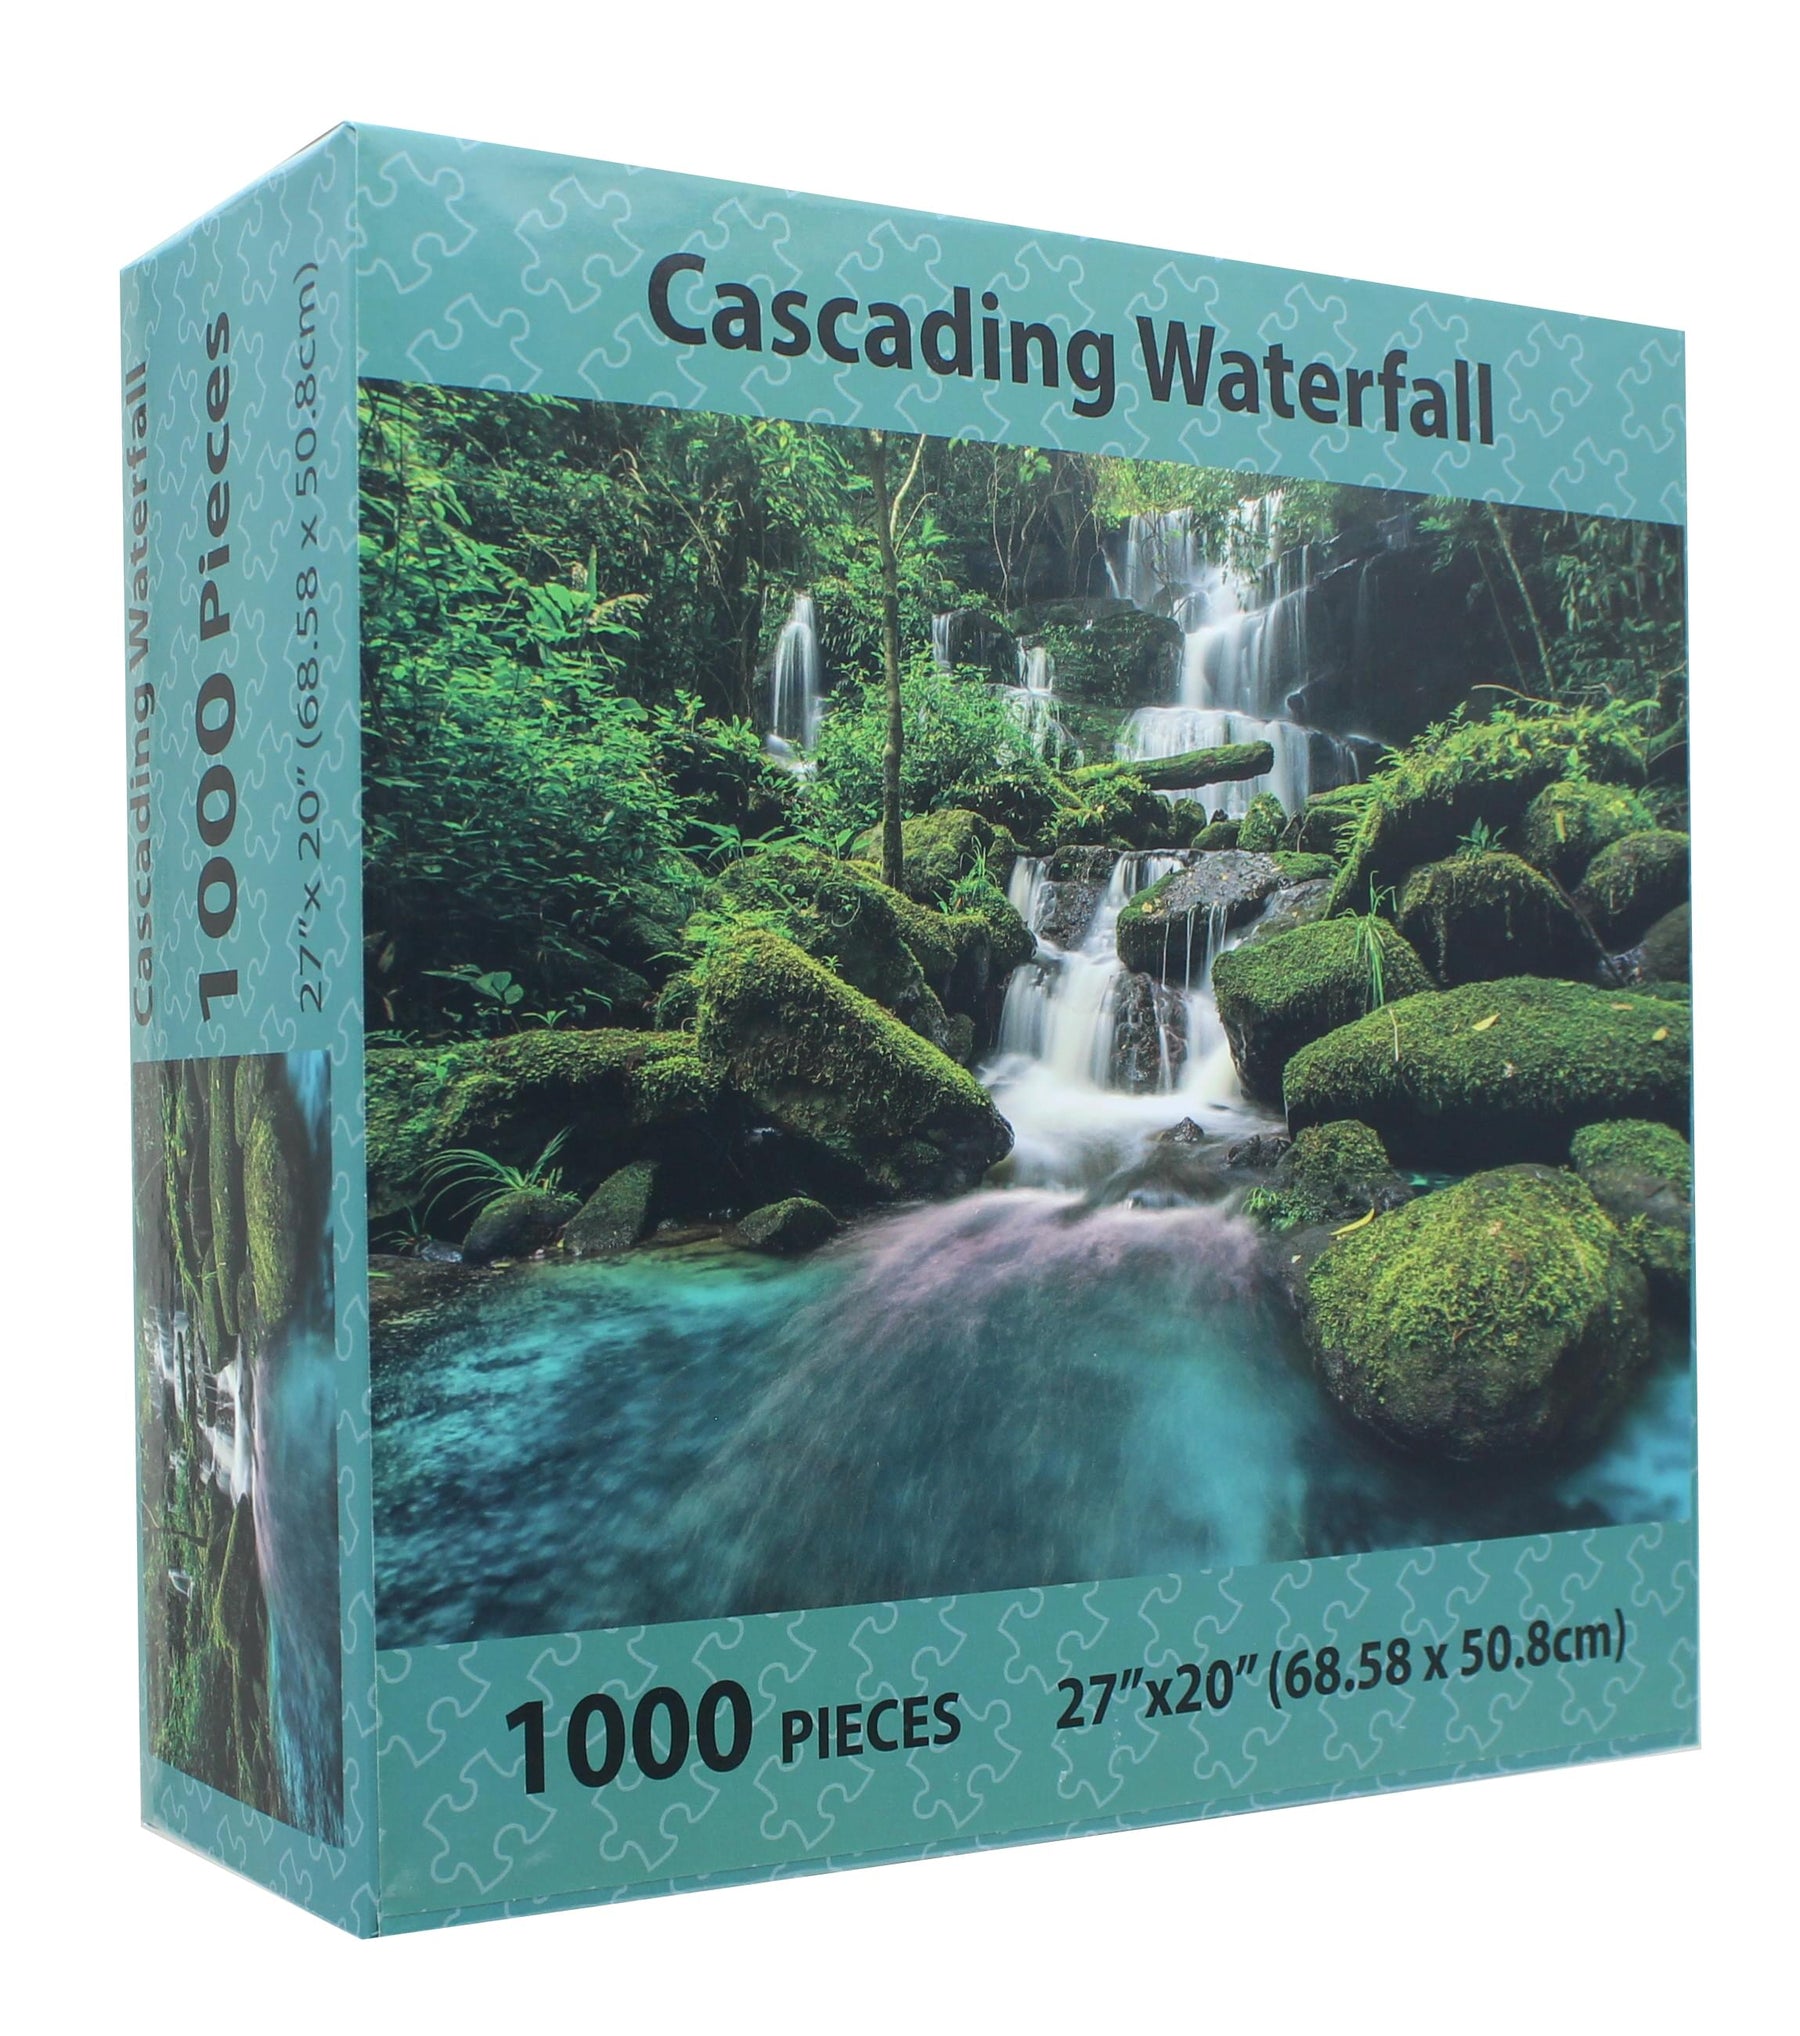 Cascading Waterfall 1000 Piece Landscape Jigsaw Puzzle